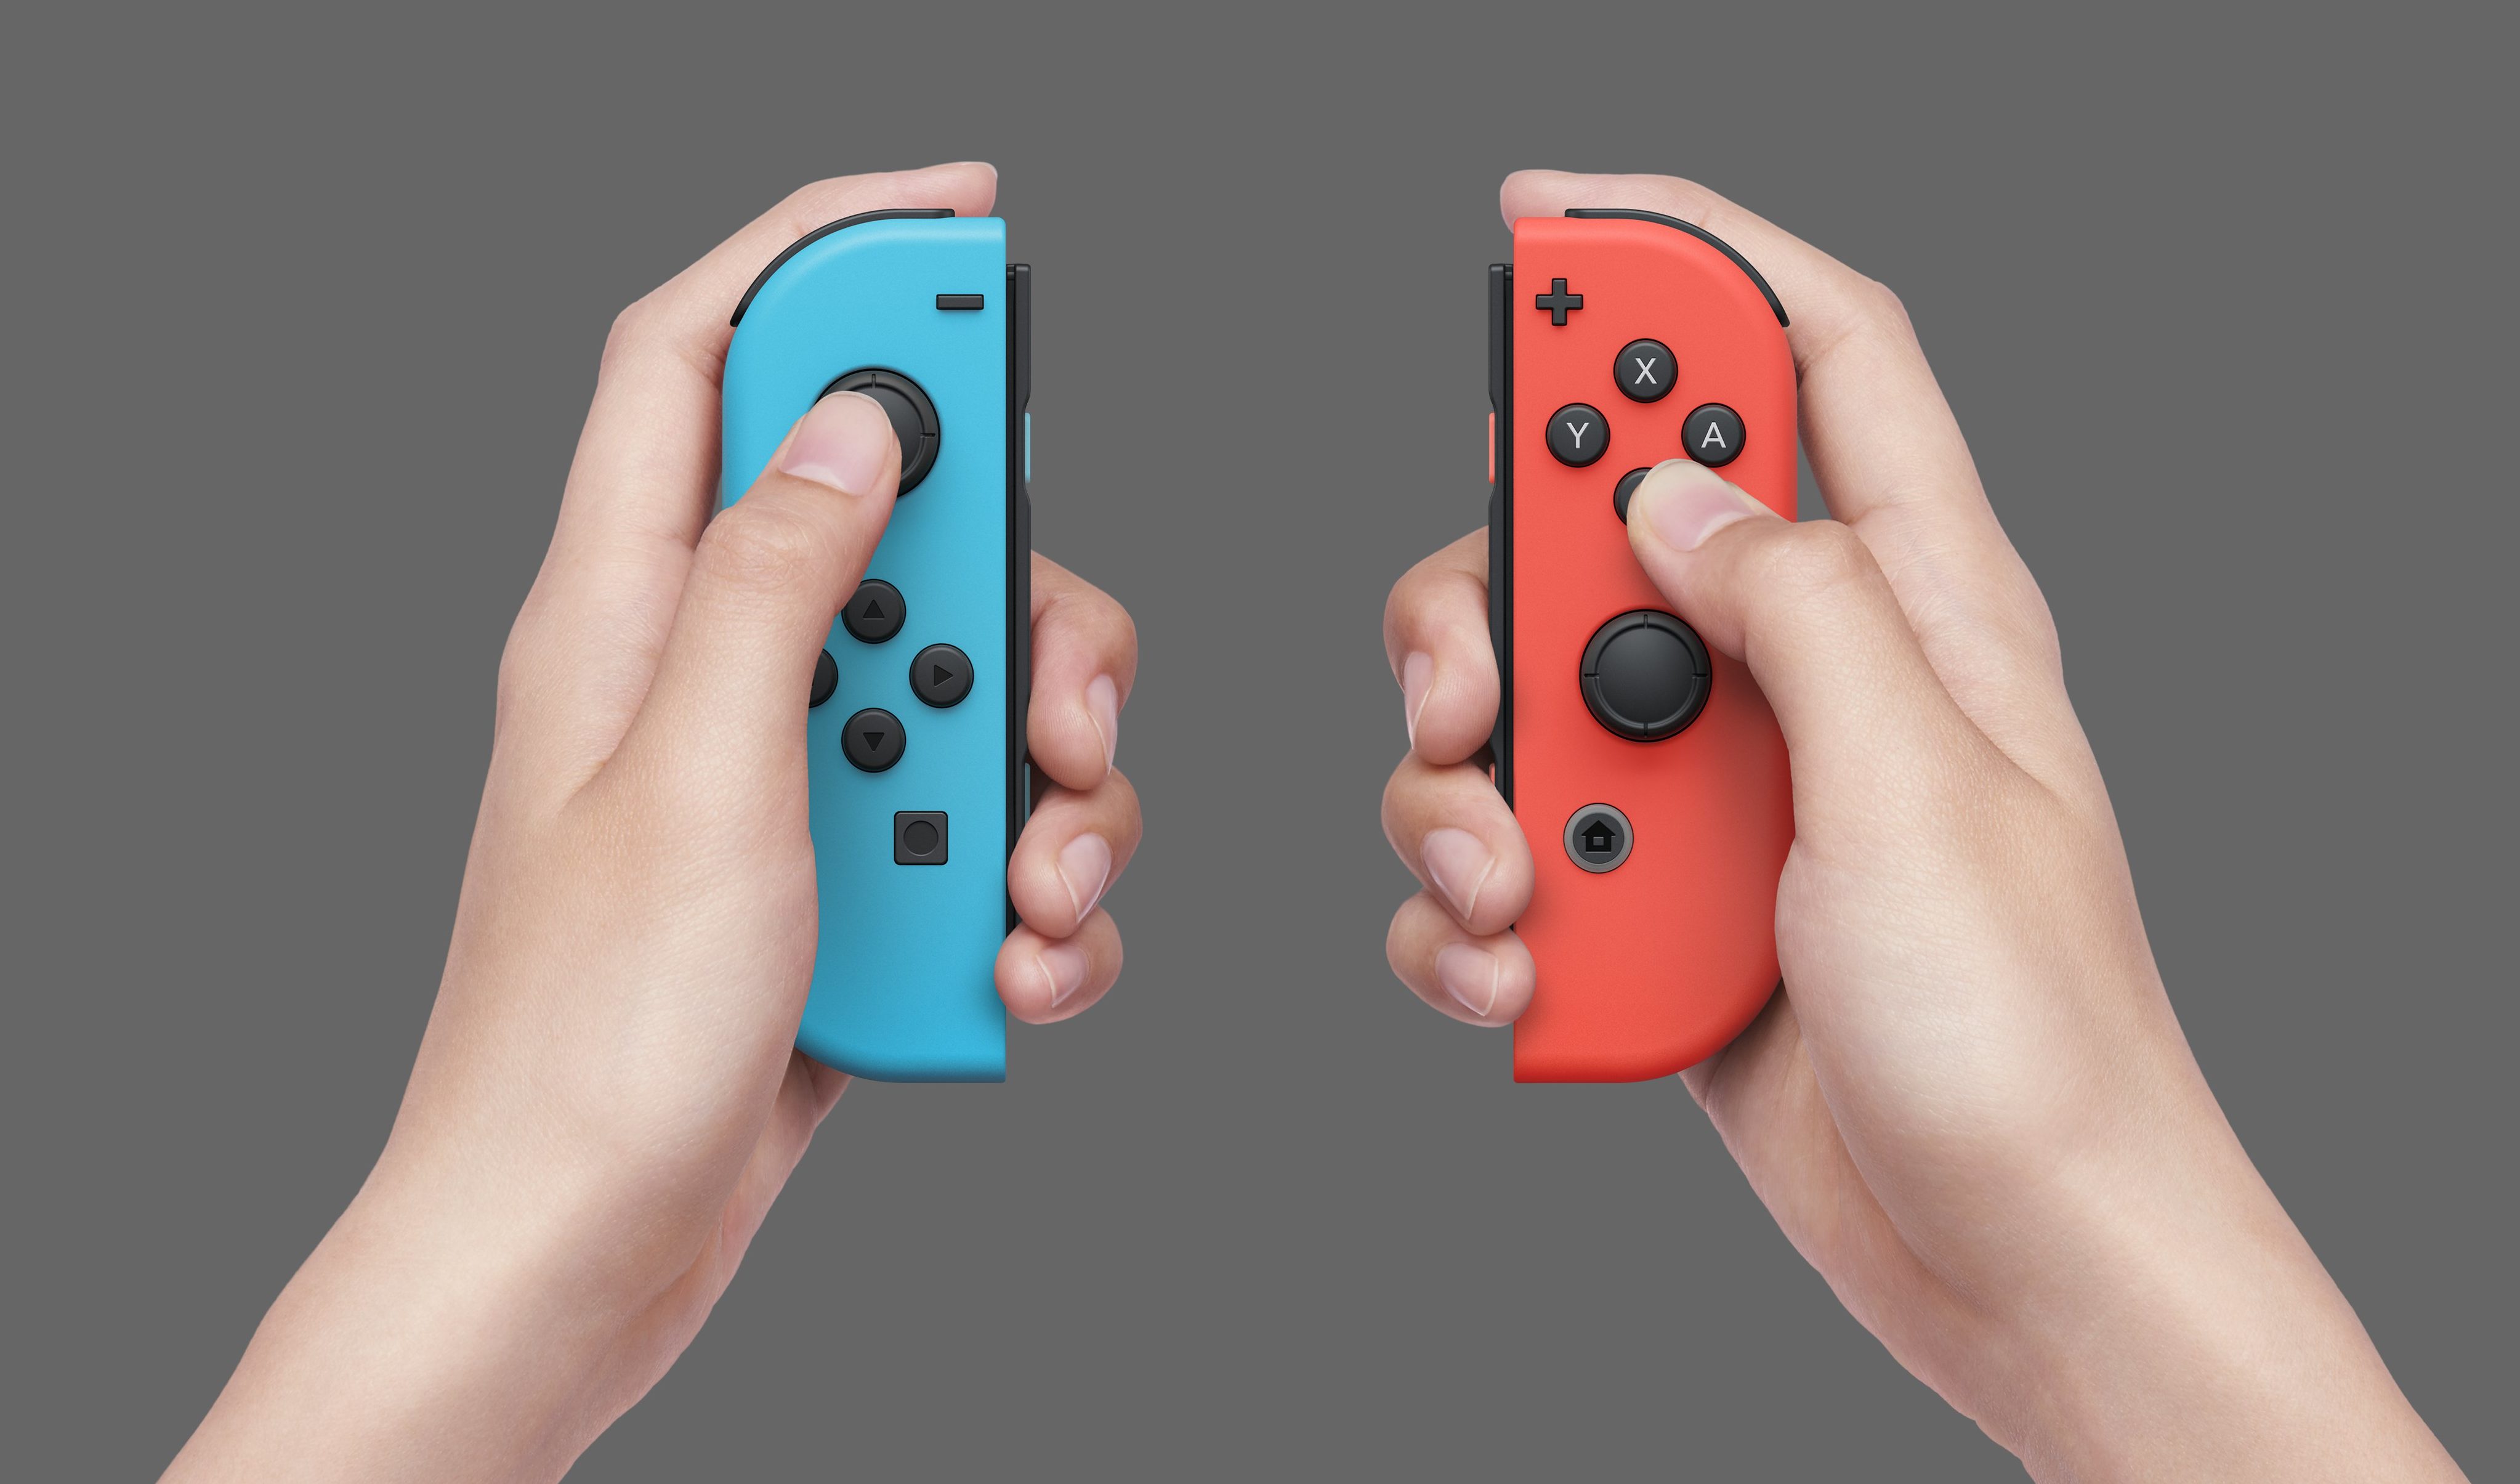 Nintendo Switch OLED model has improved Joy-Cons, but drift